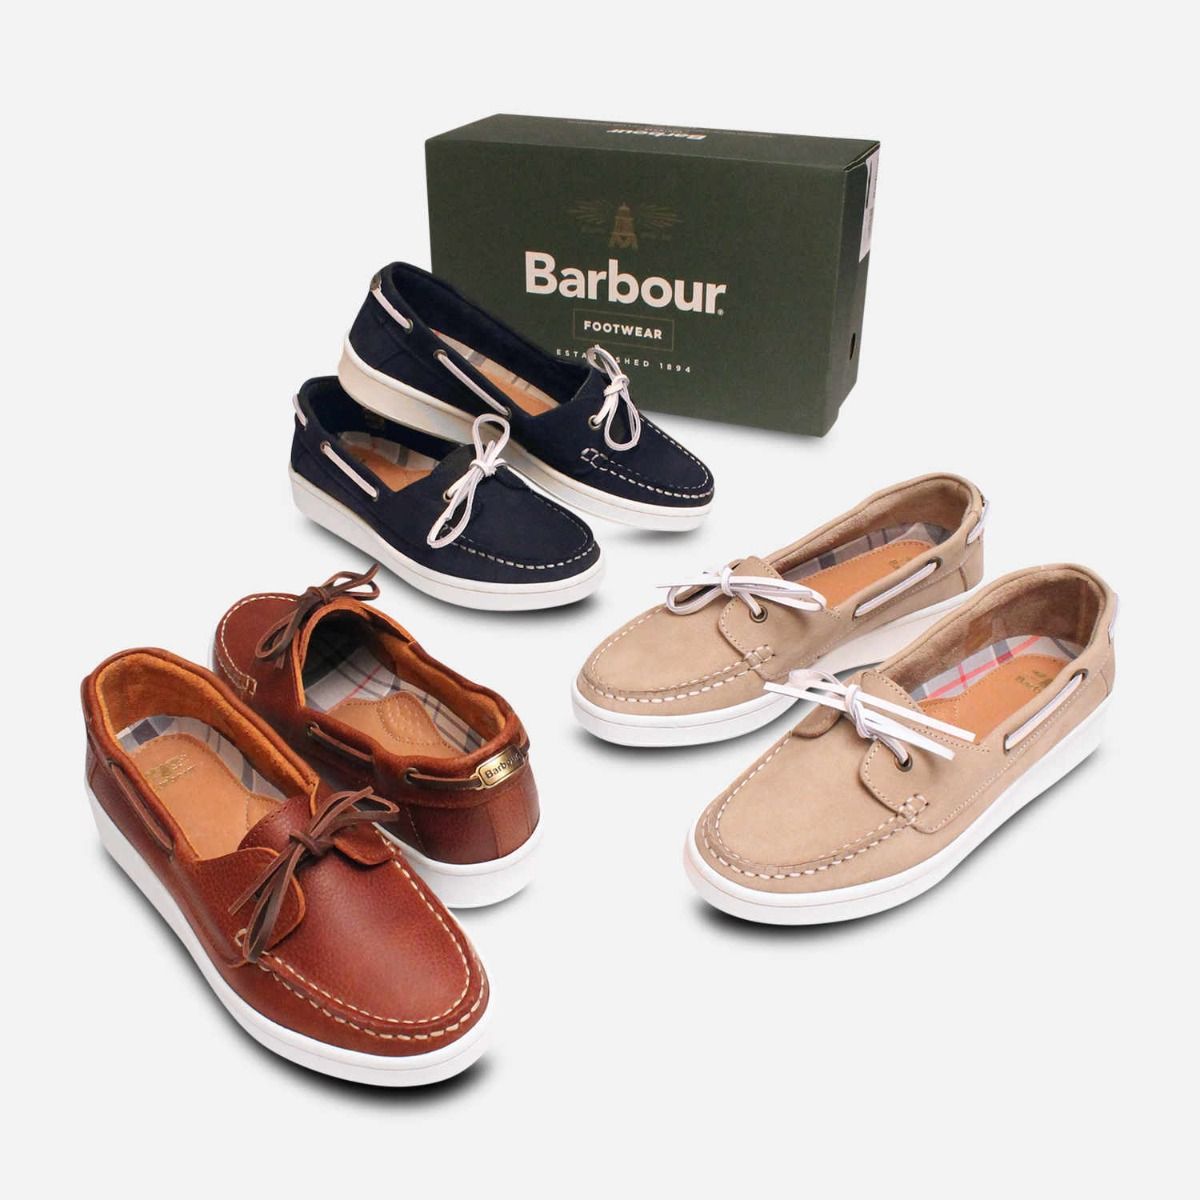 barbour boots sale